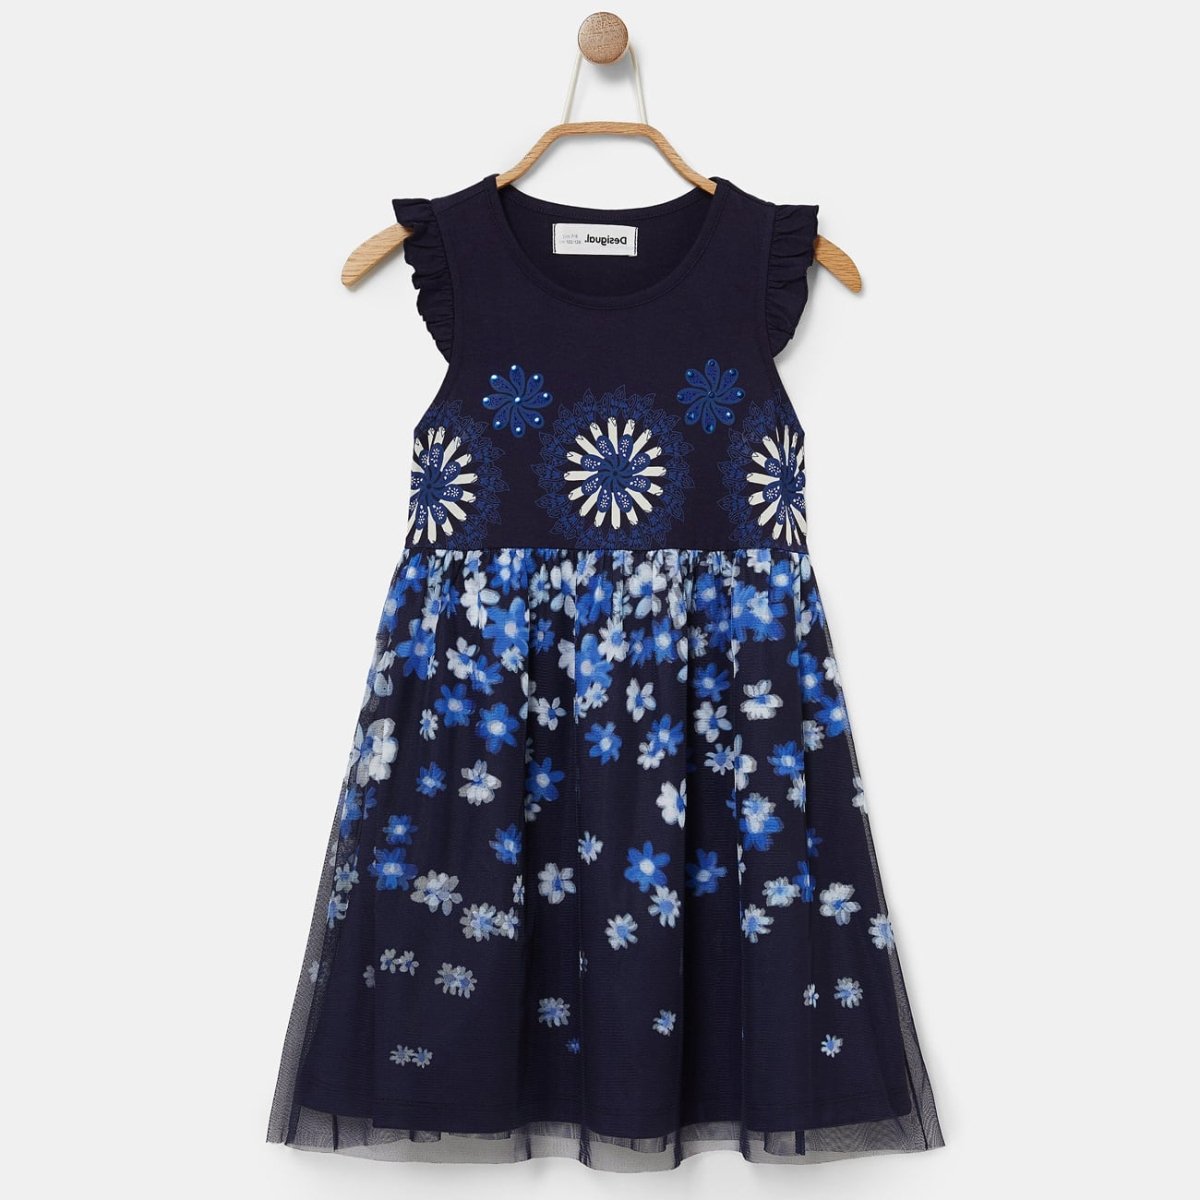 Vestito con fiori - DESIGUAL bambina - Taxi Bleu Moda Donna -